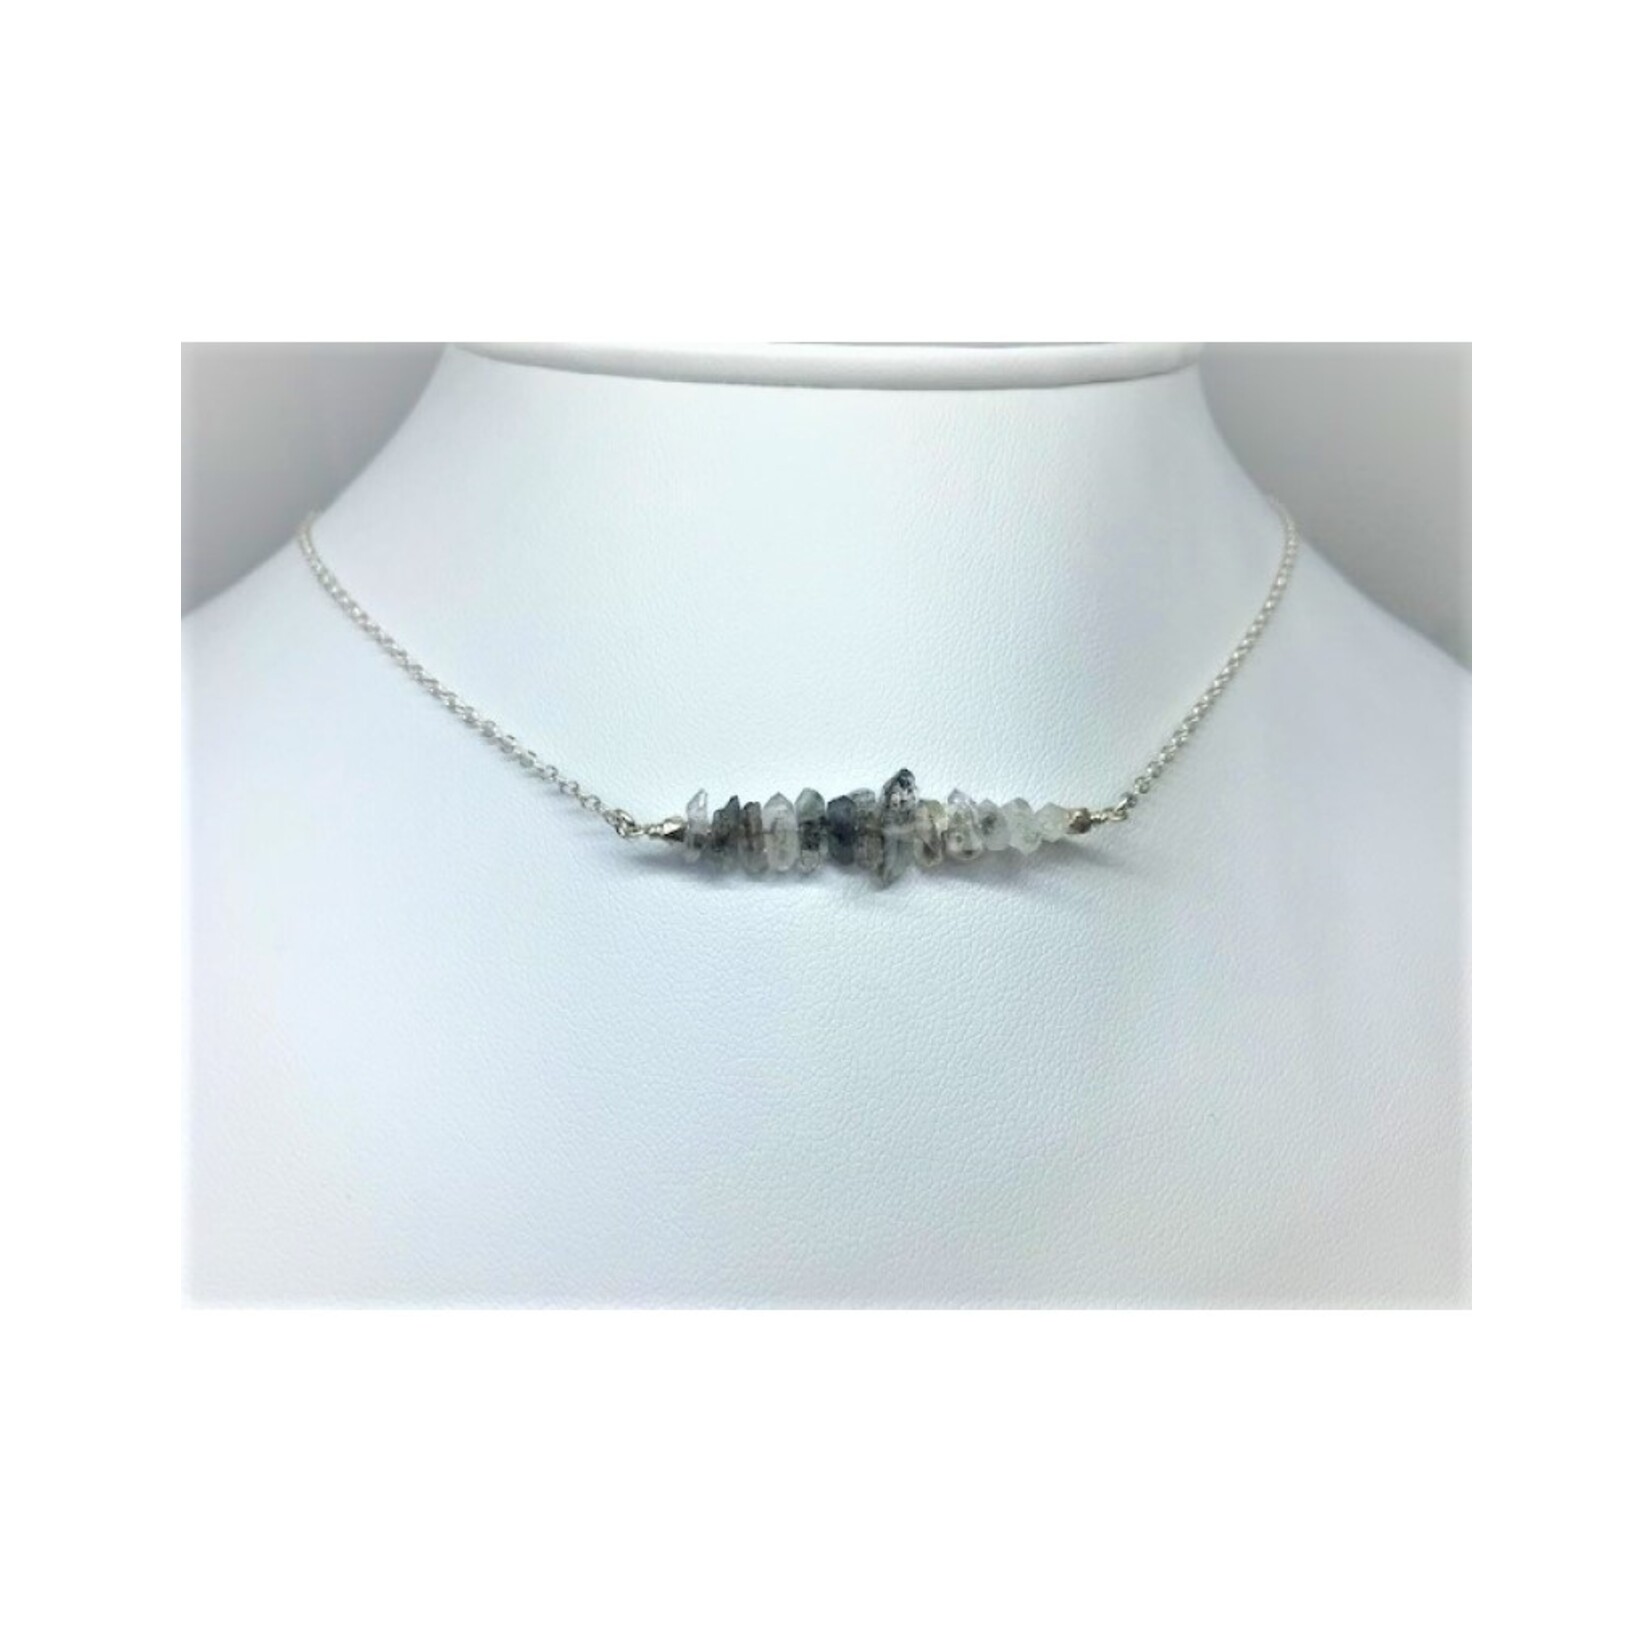 Gemstone Bar Necklace - Herkimer Diamond